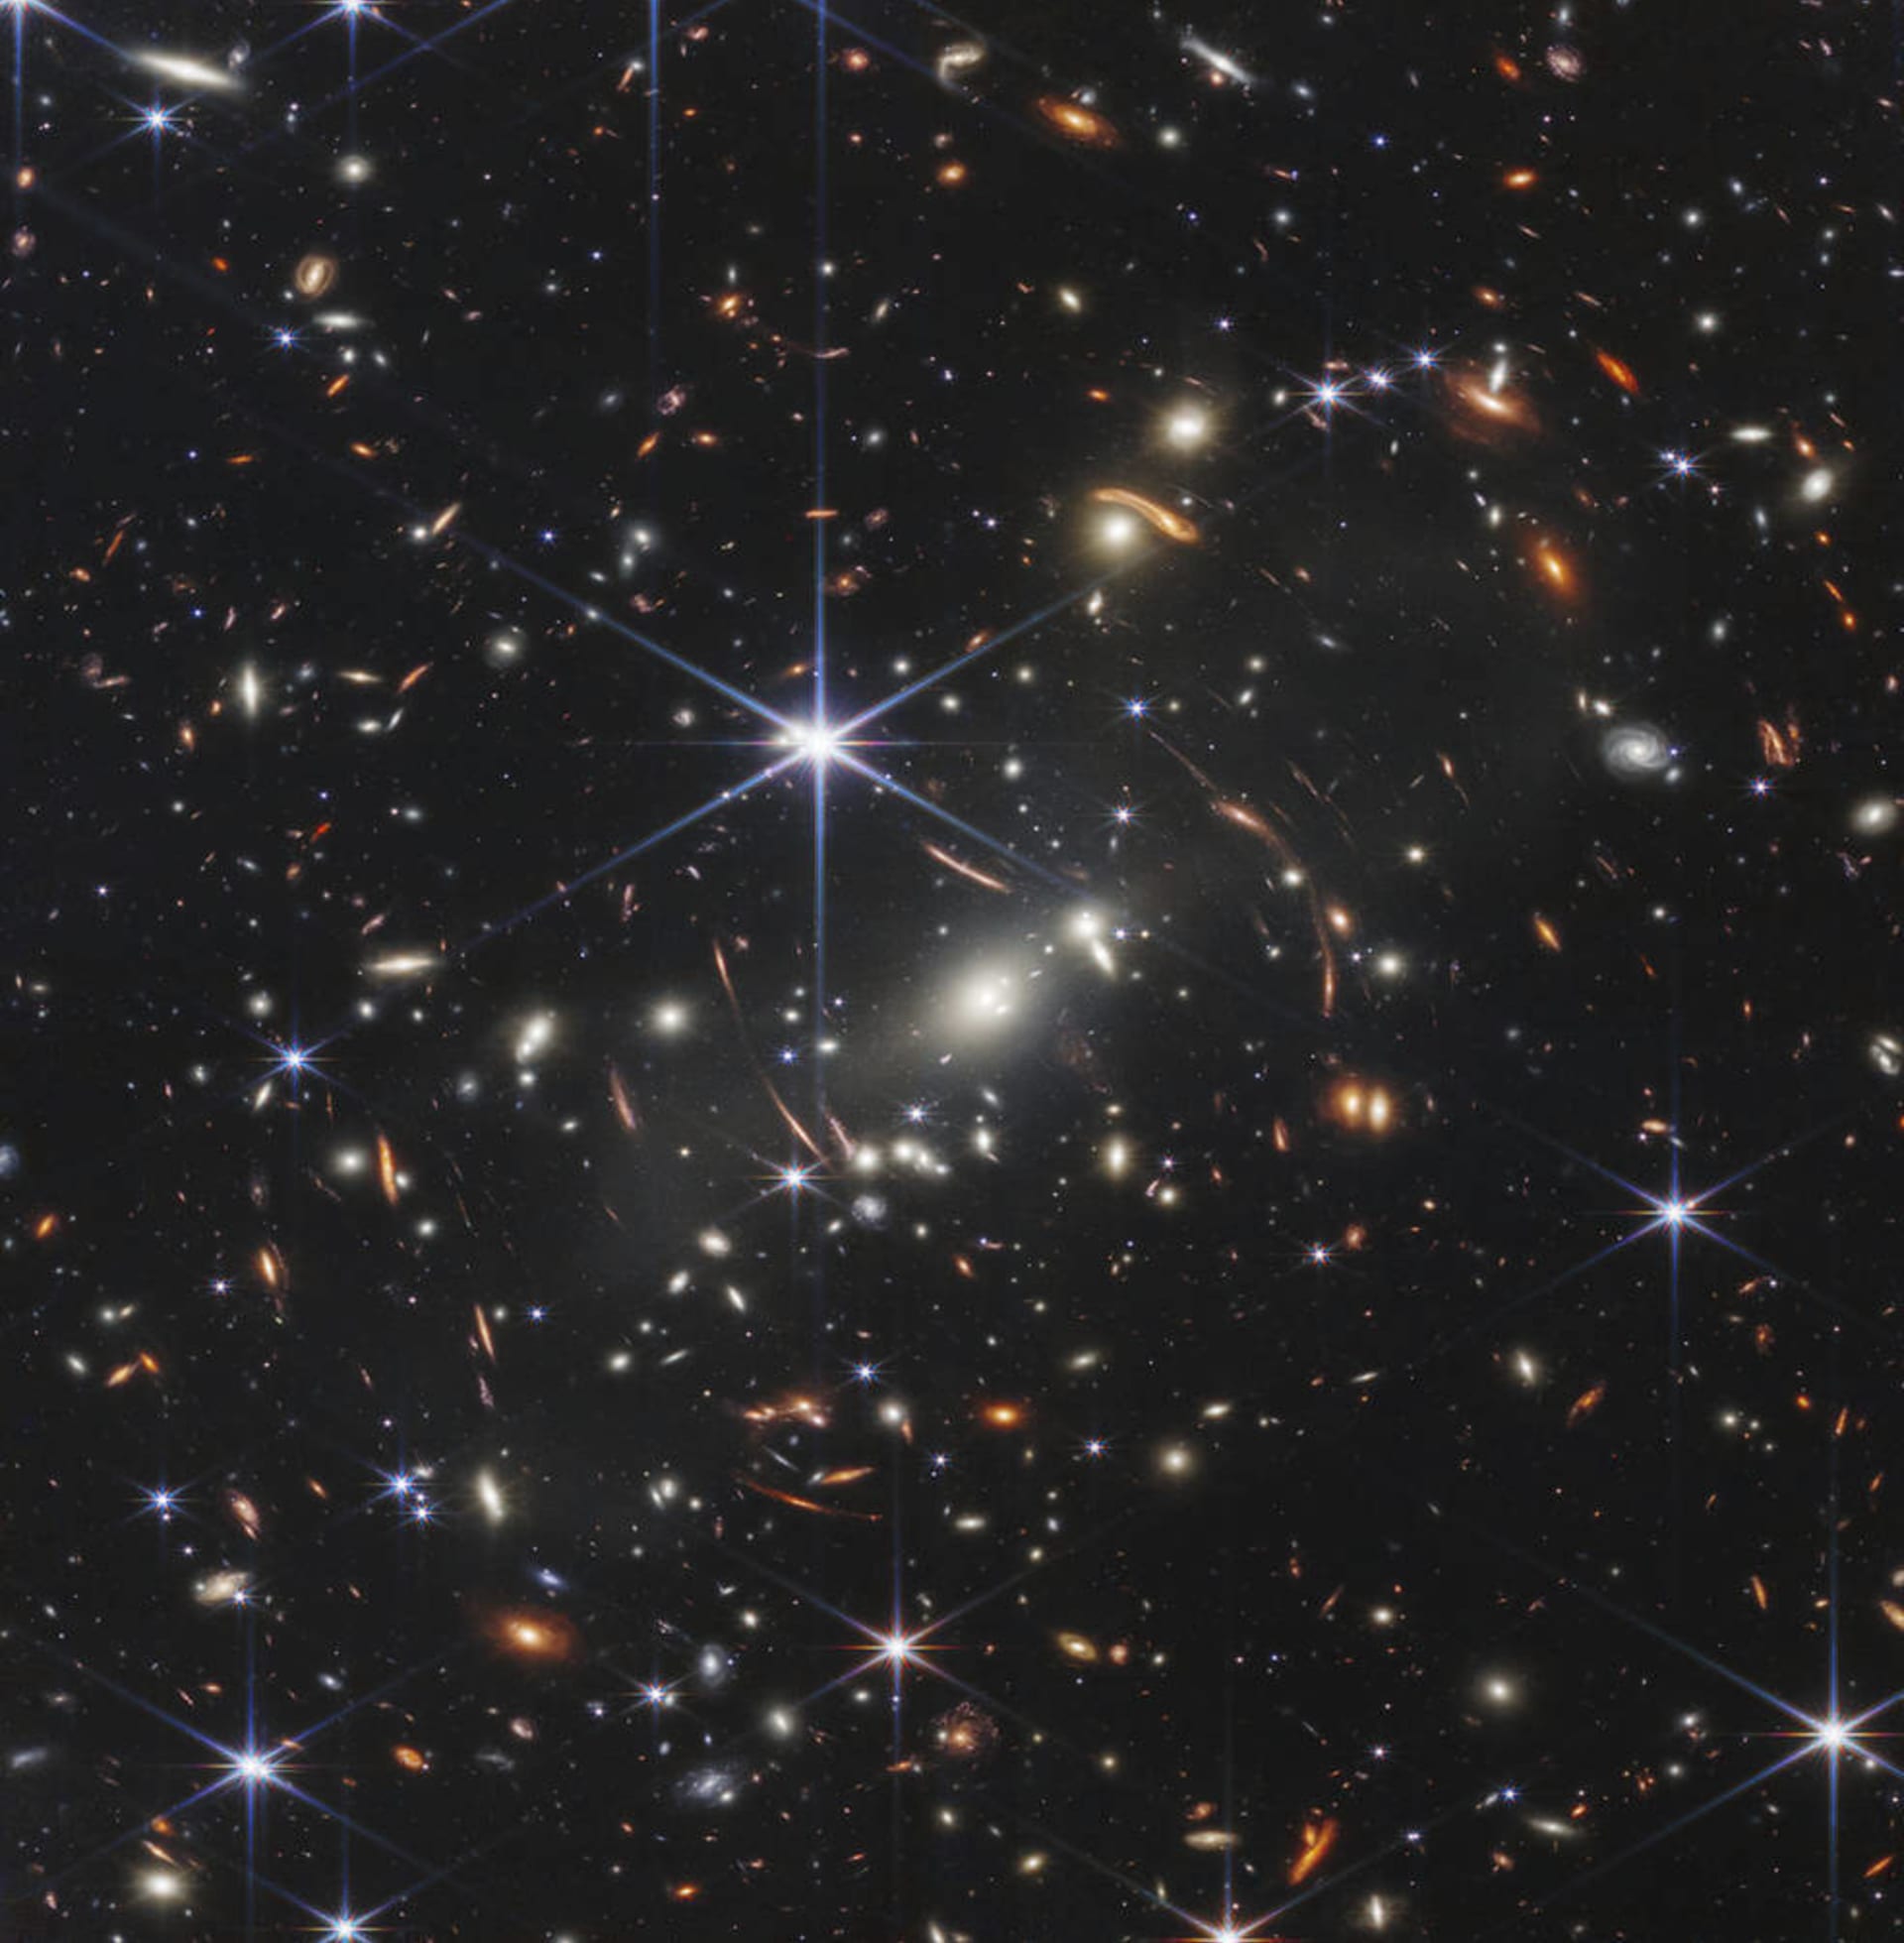 Kupa galaxií SMACS 0723